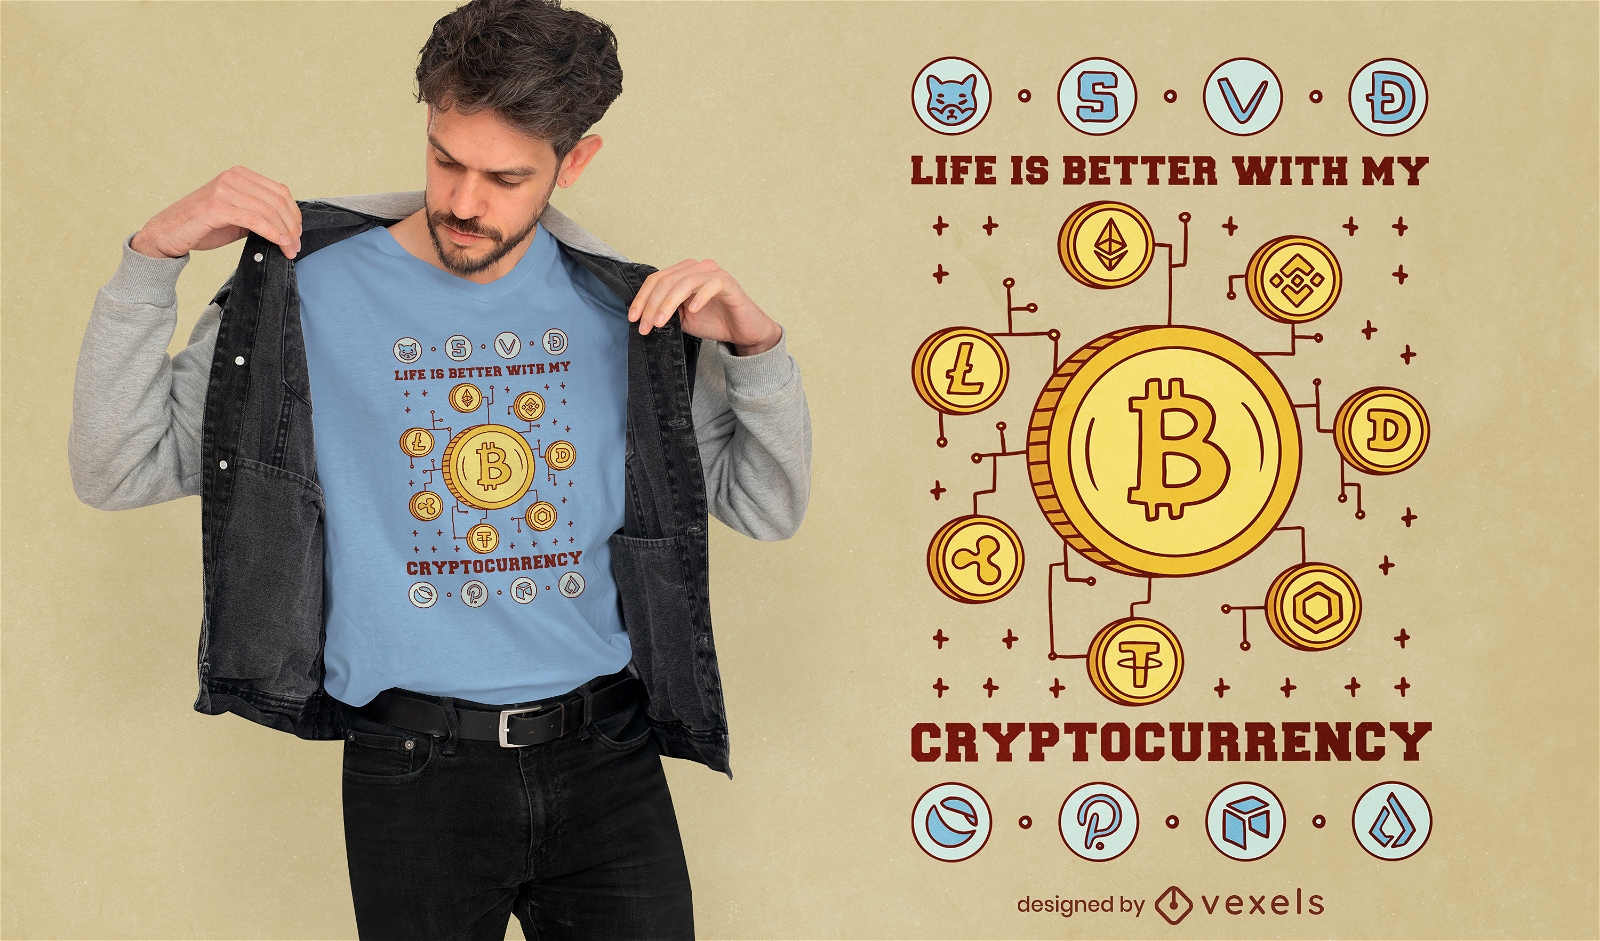 Cyptocurrency symbols t-shirt design